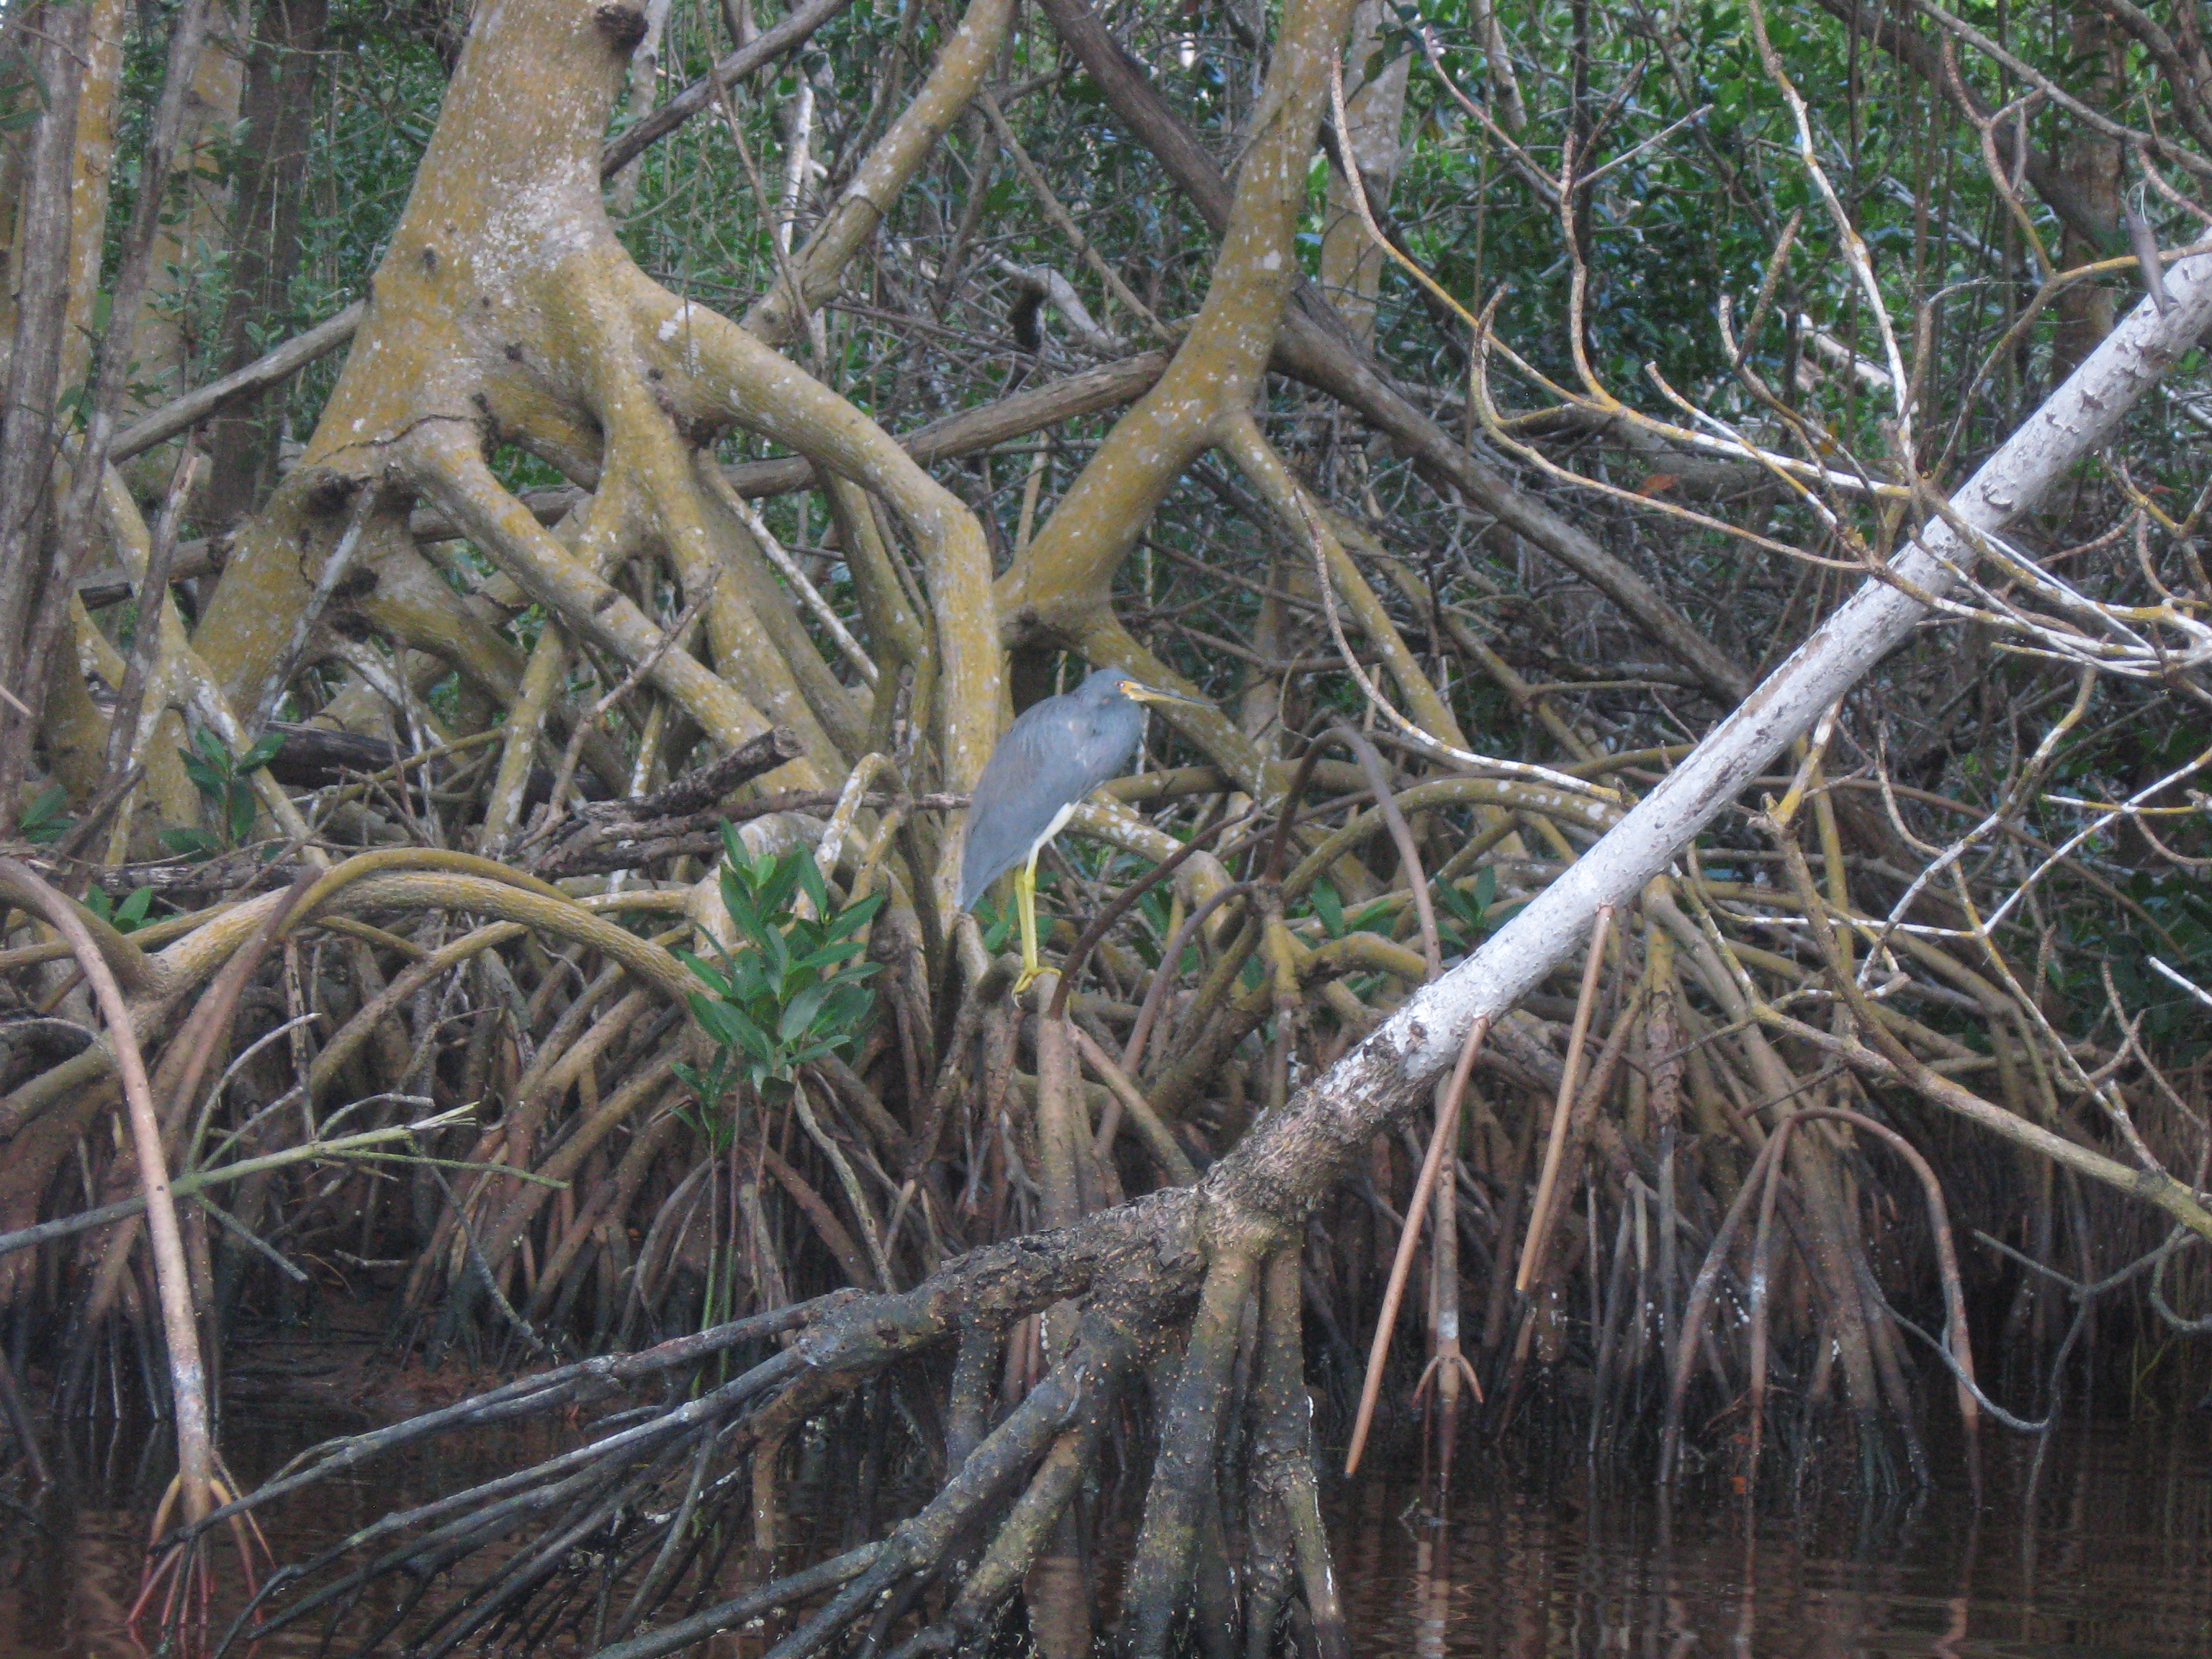 Tricolored Heron in Mangrove